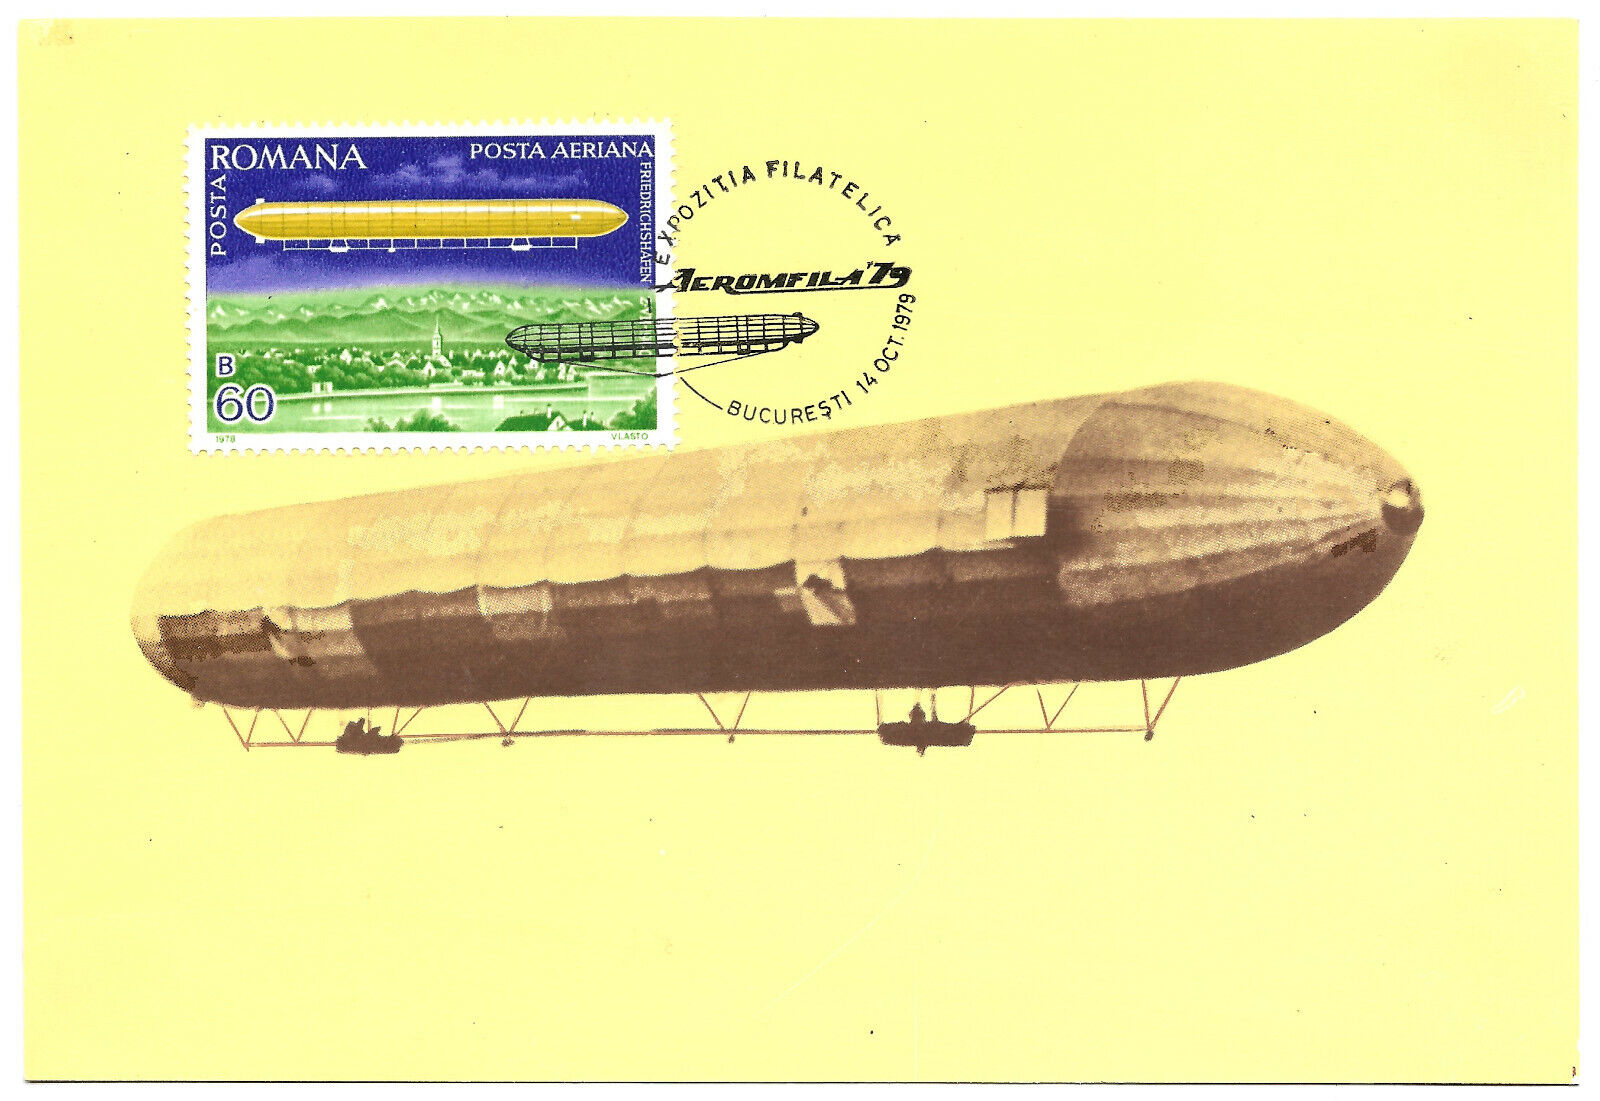 ROMANIAN PHILATELIC AVIATION EXHIBITION Zeppelin LZ 1 AEROMFILA 1979 BUCURESTI